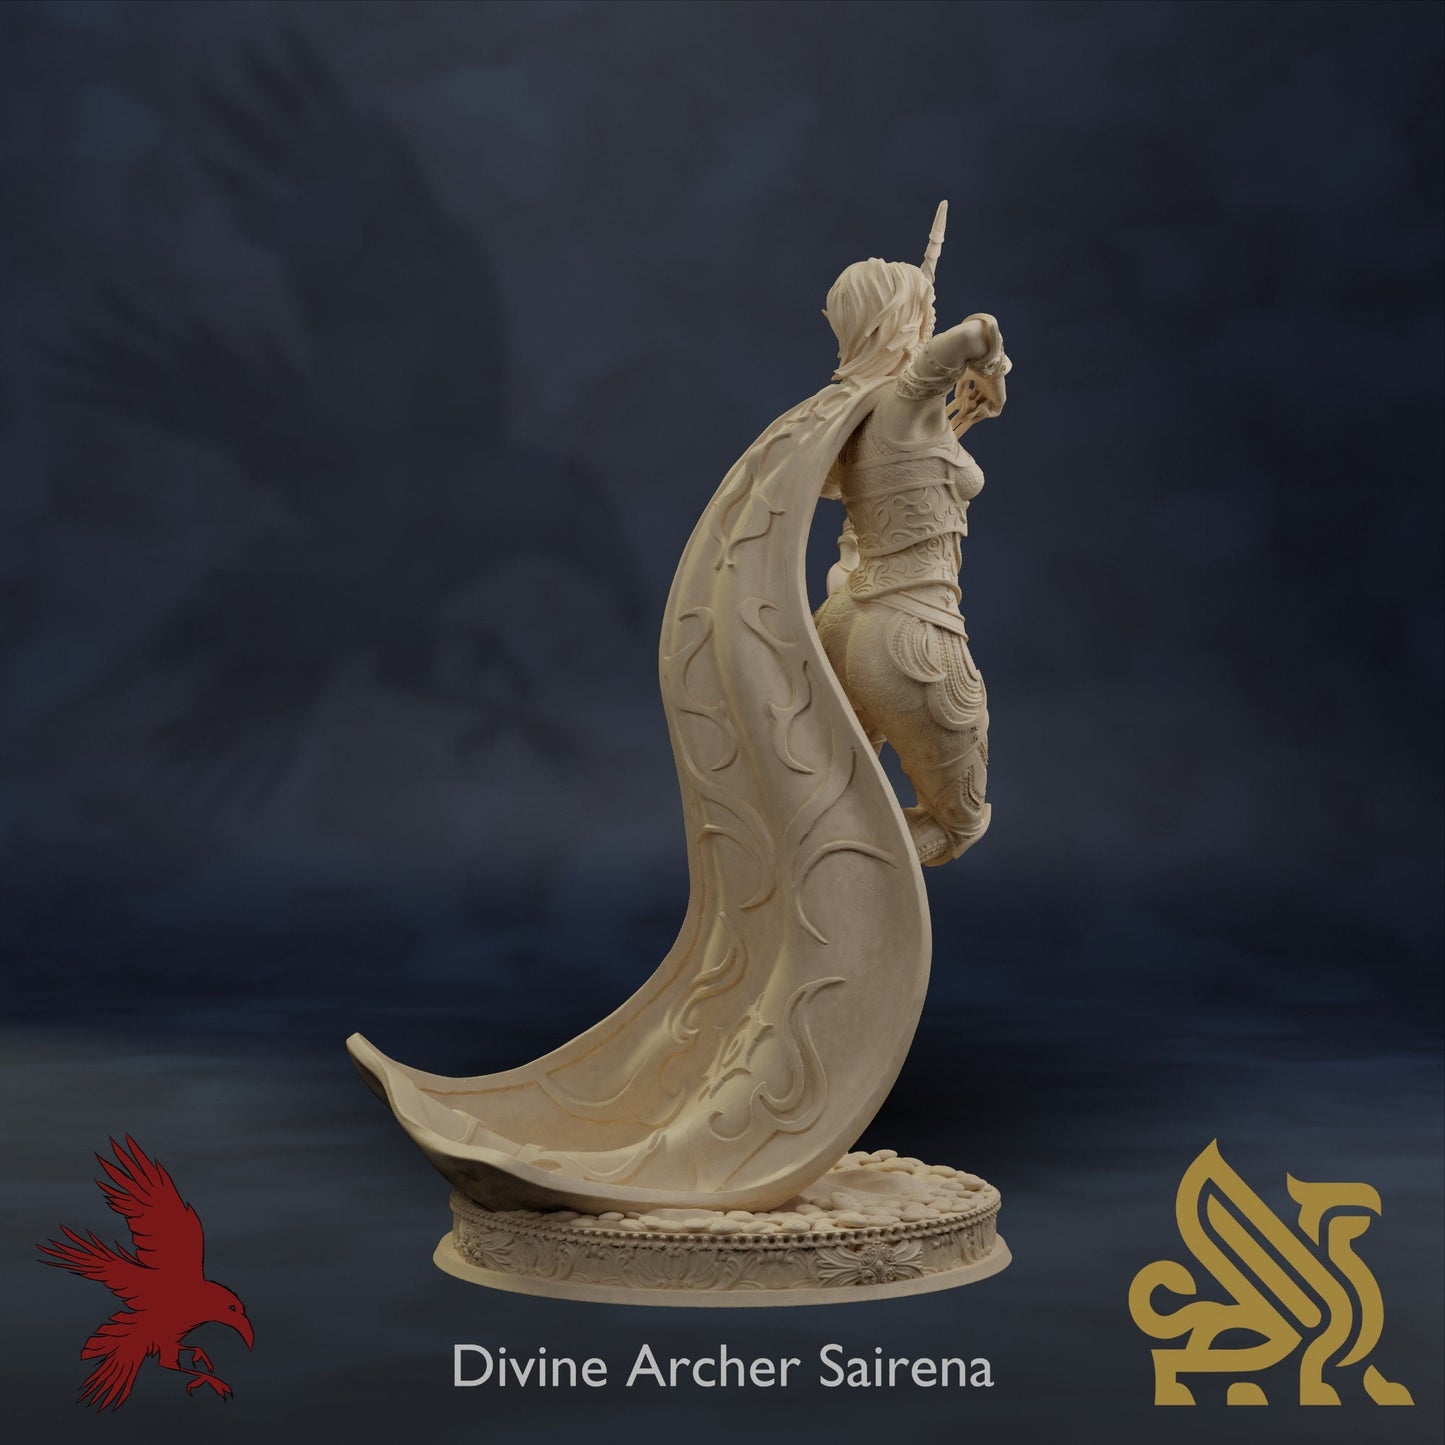 Divine Archer Sairena